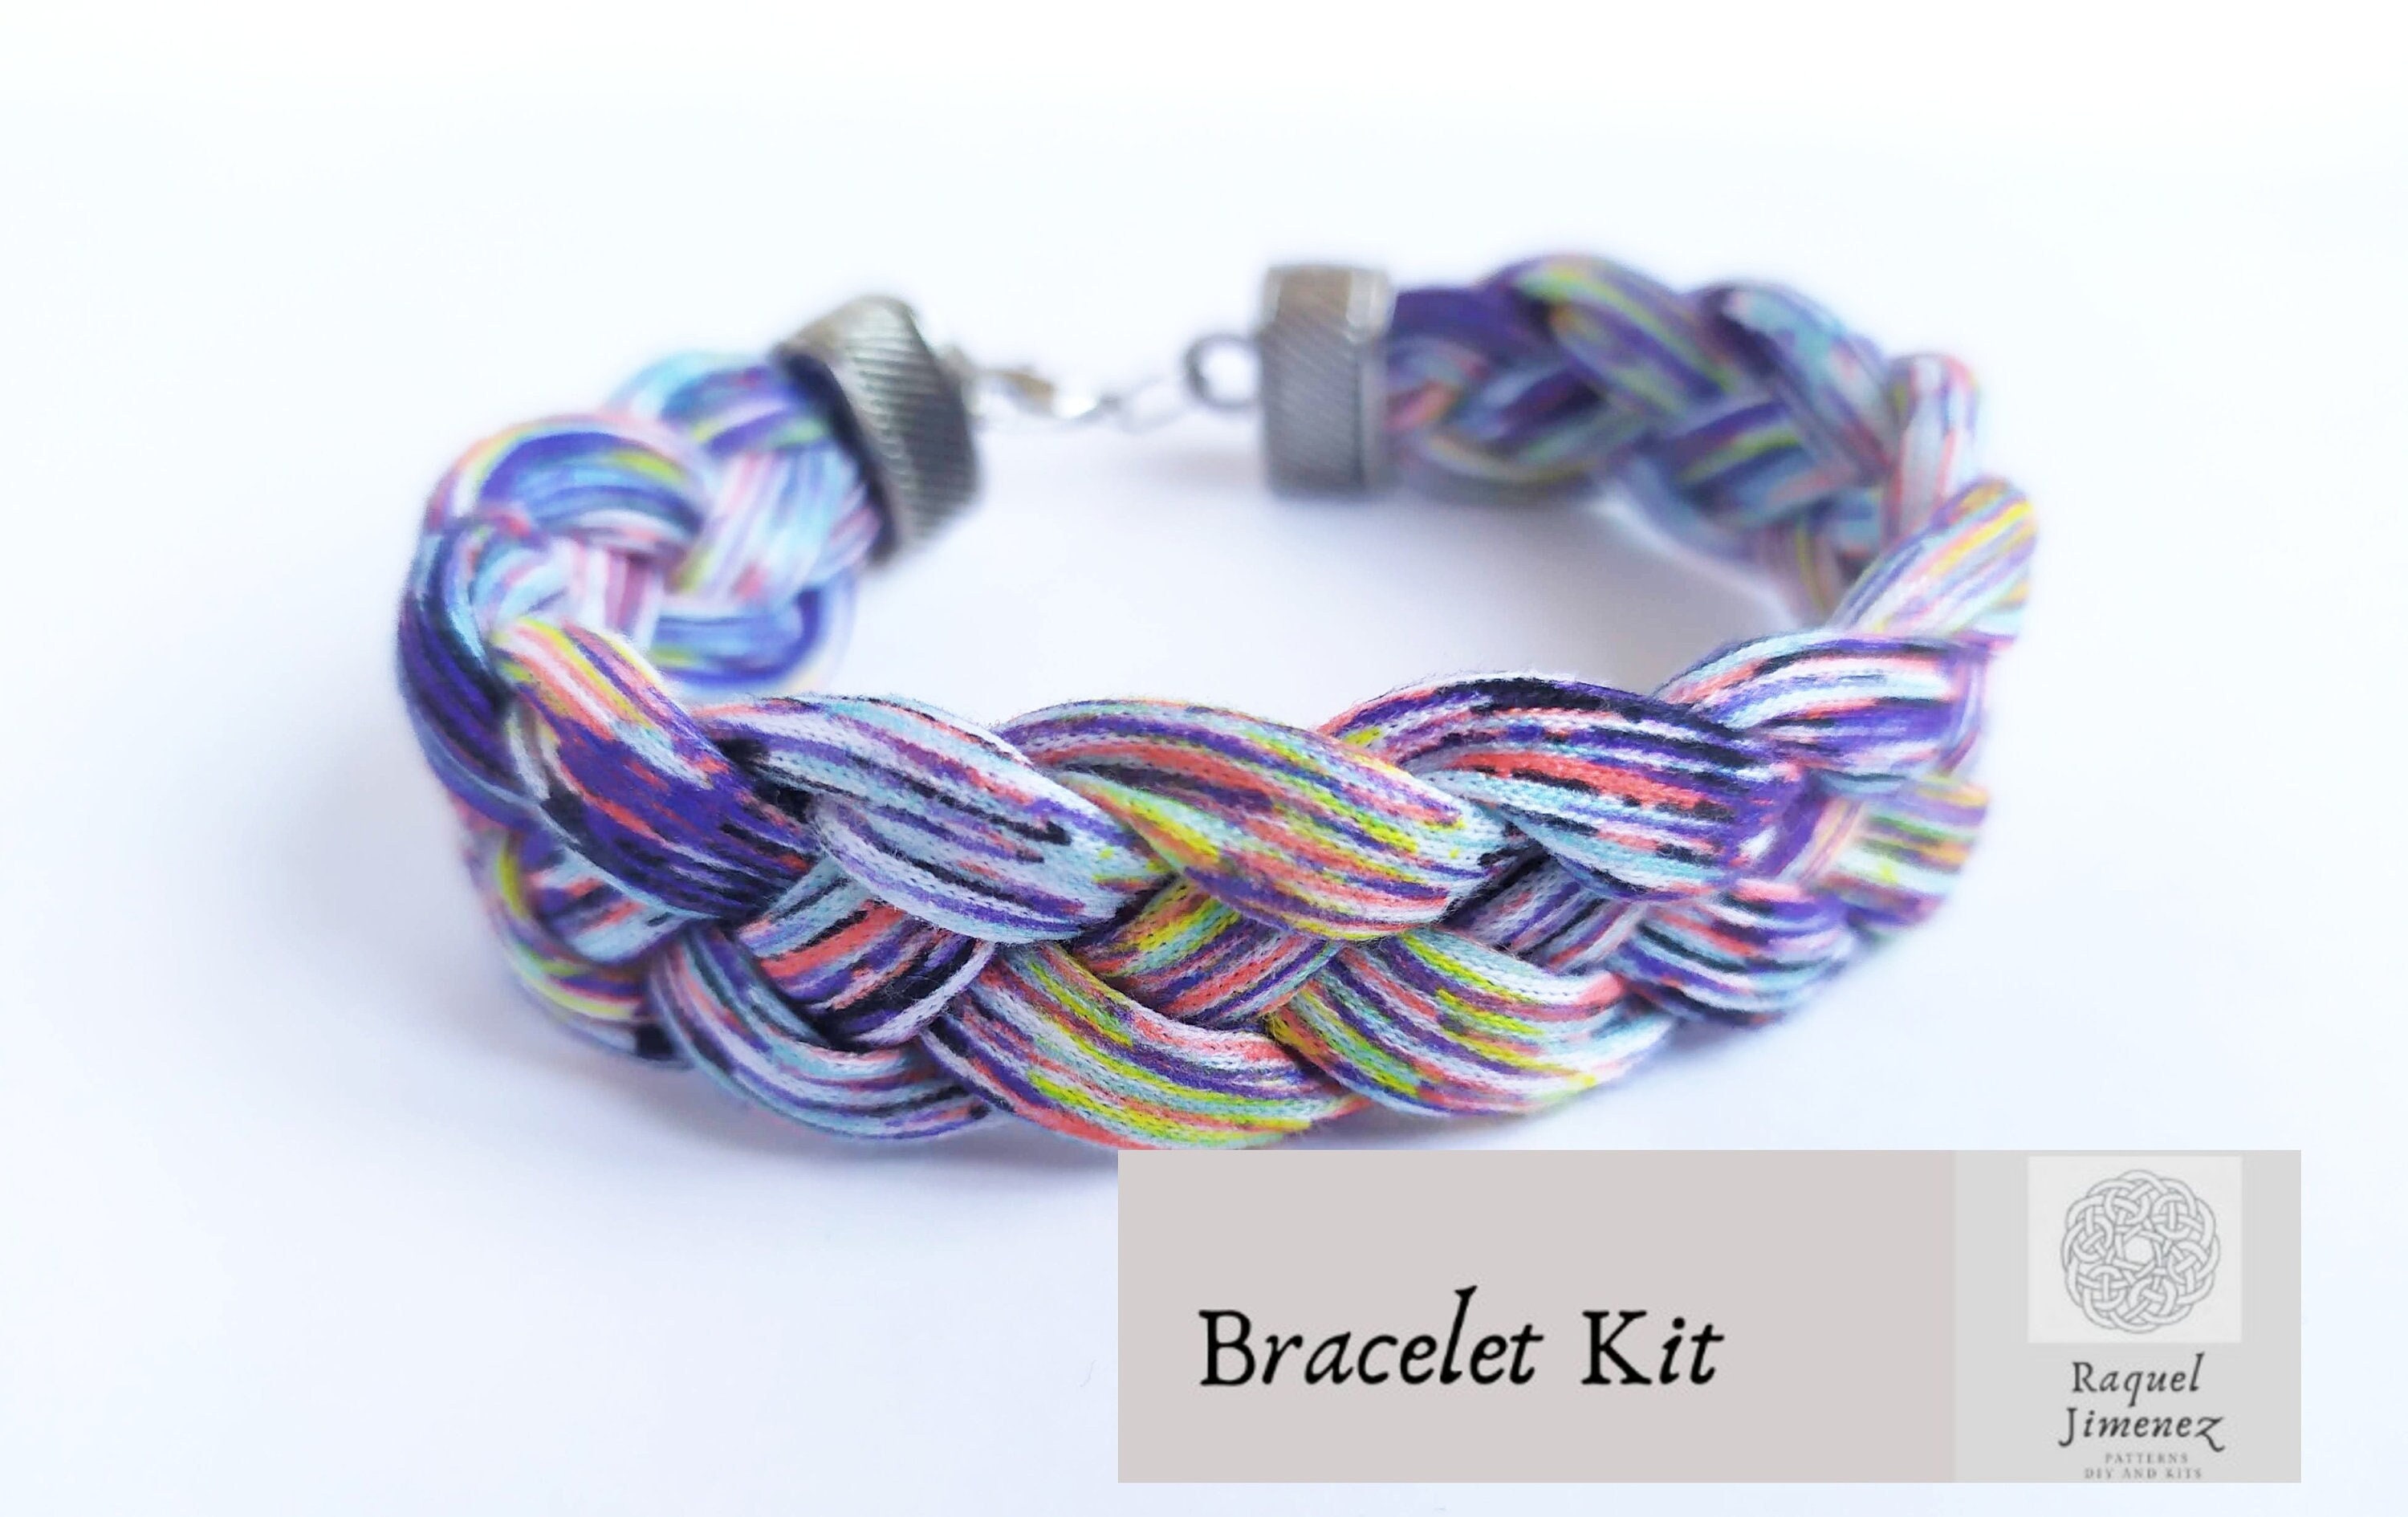 DIY Jewelry Kit, DIY Bracelet Kit, Craft Kit for Adults and Teens